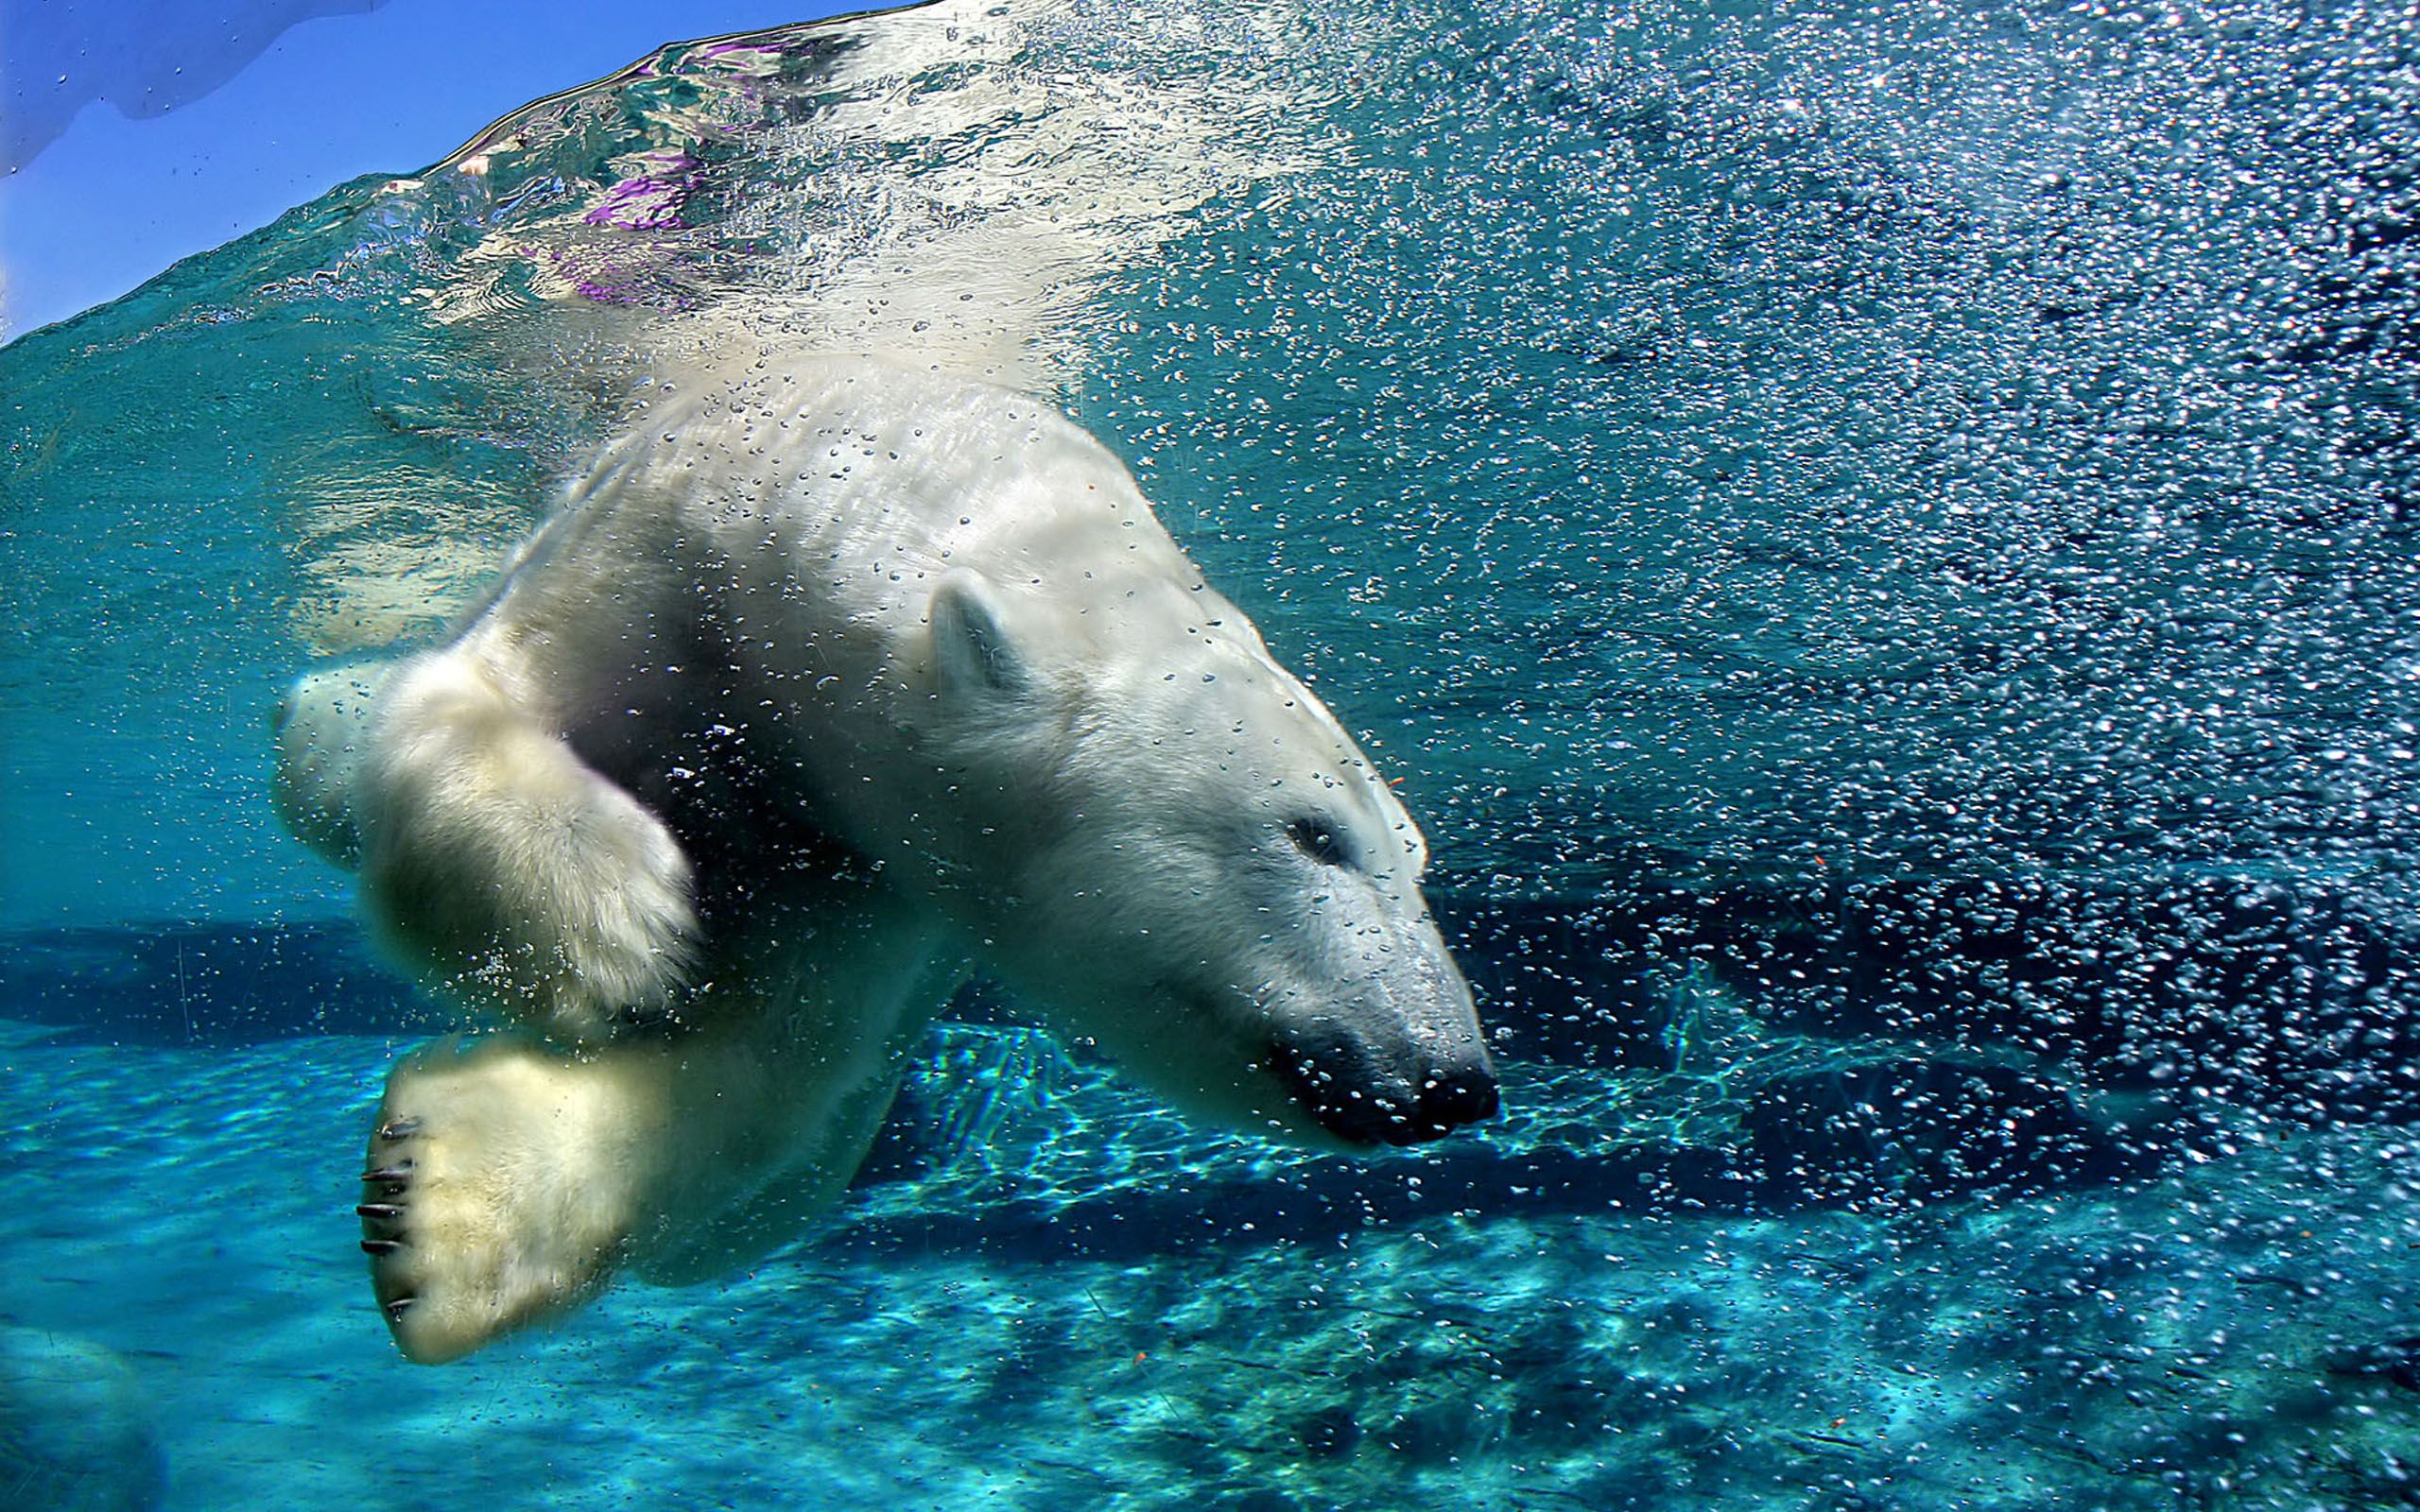 1437803 descargar imagen animales, oso polar: fondos de pantalla y protectores de pantalla gratis